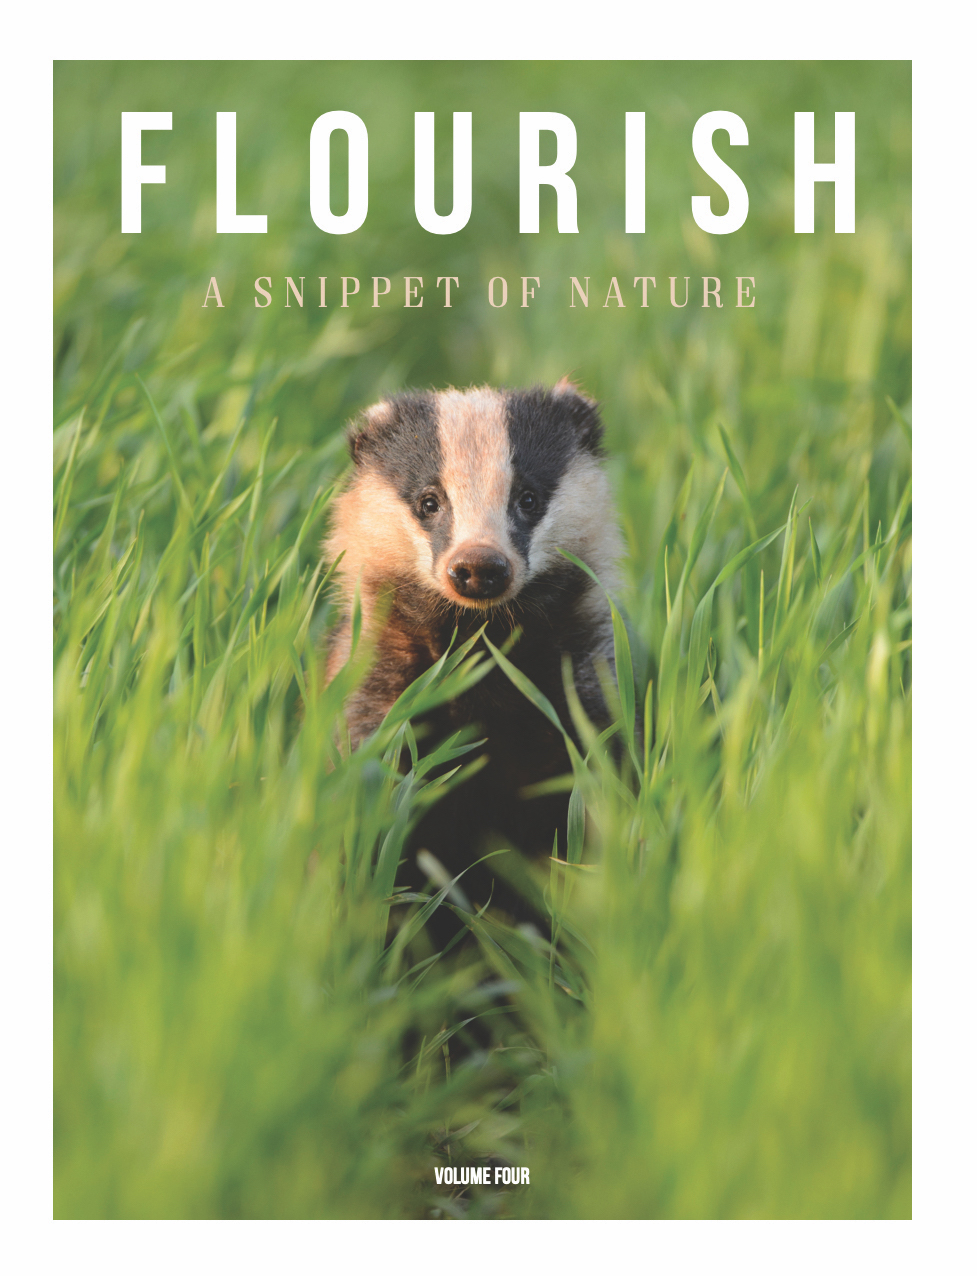 Magazine Flourish - Volume 4 - A Snippet of Nature